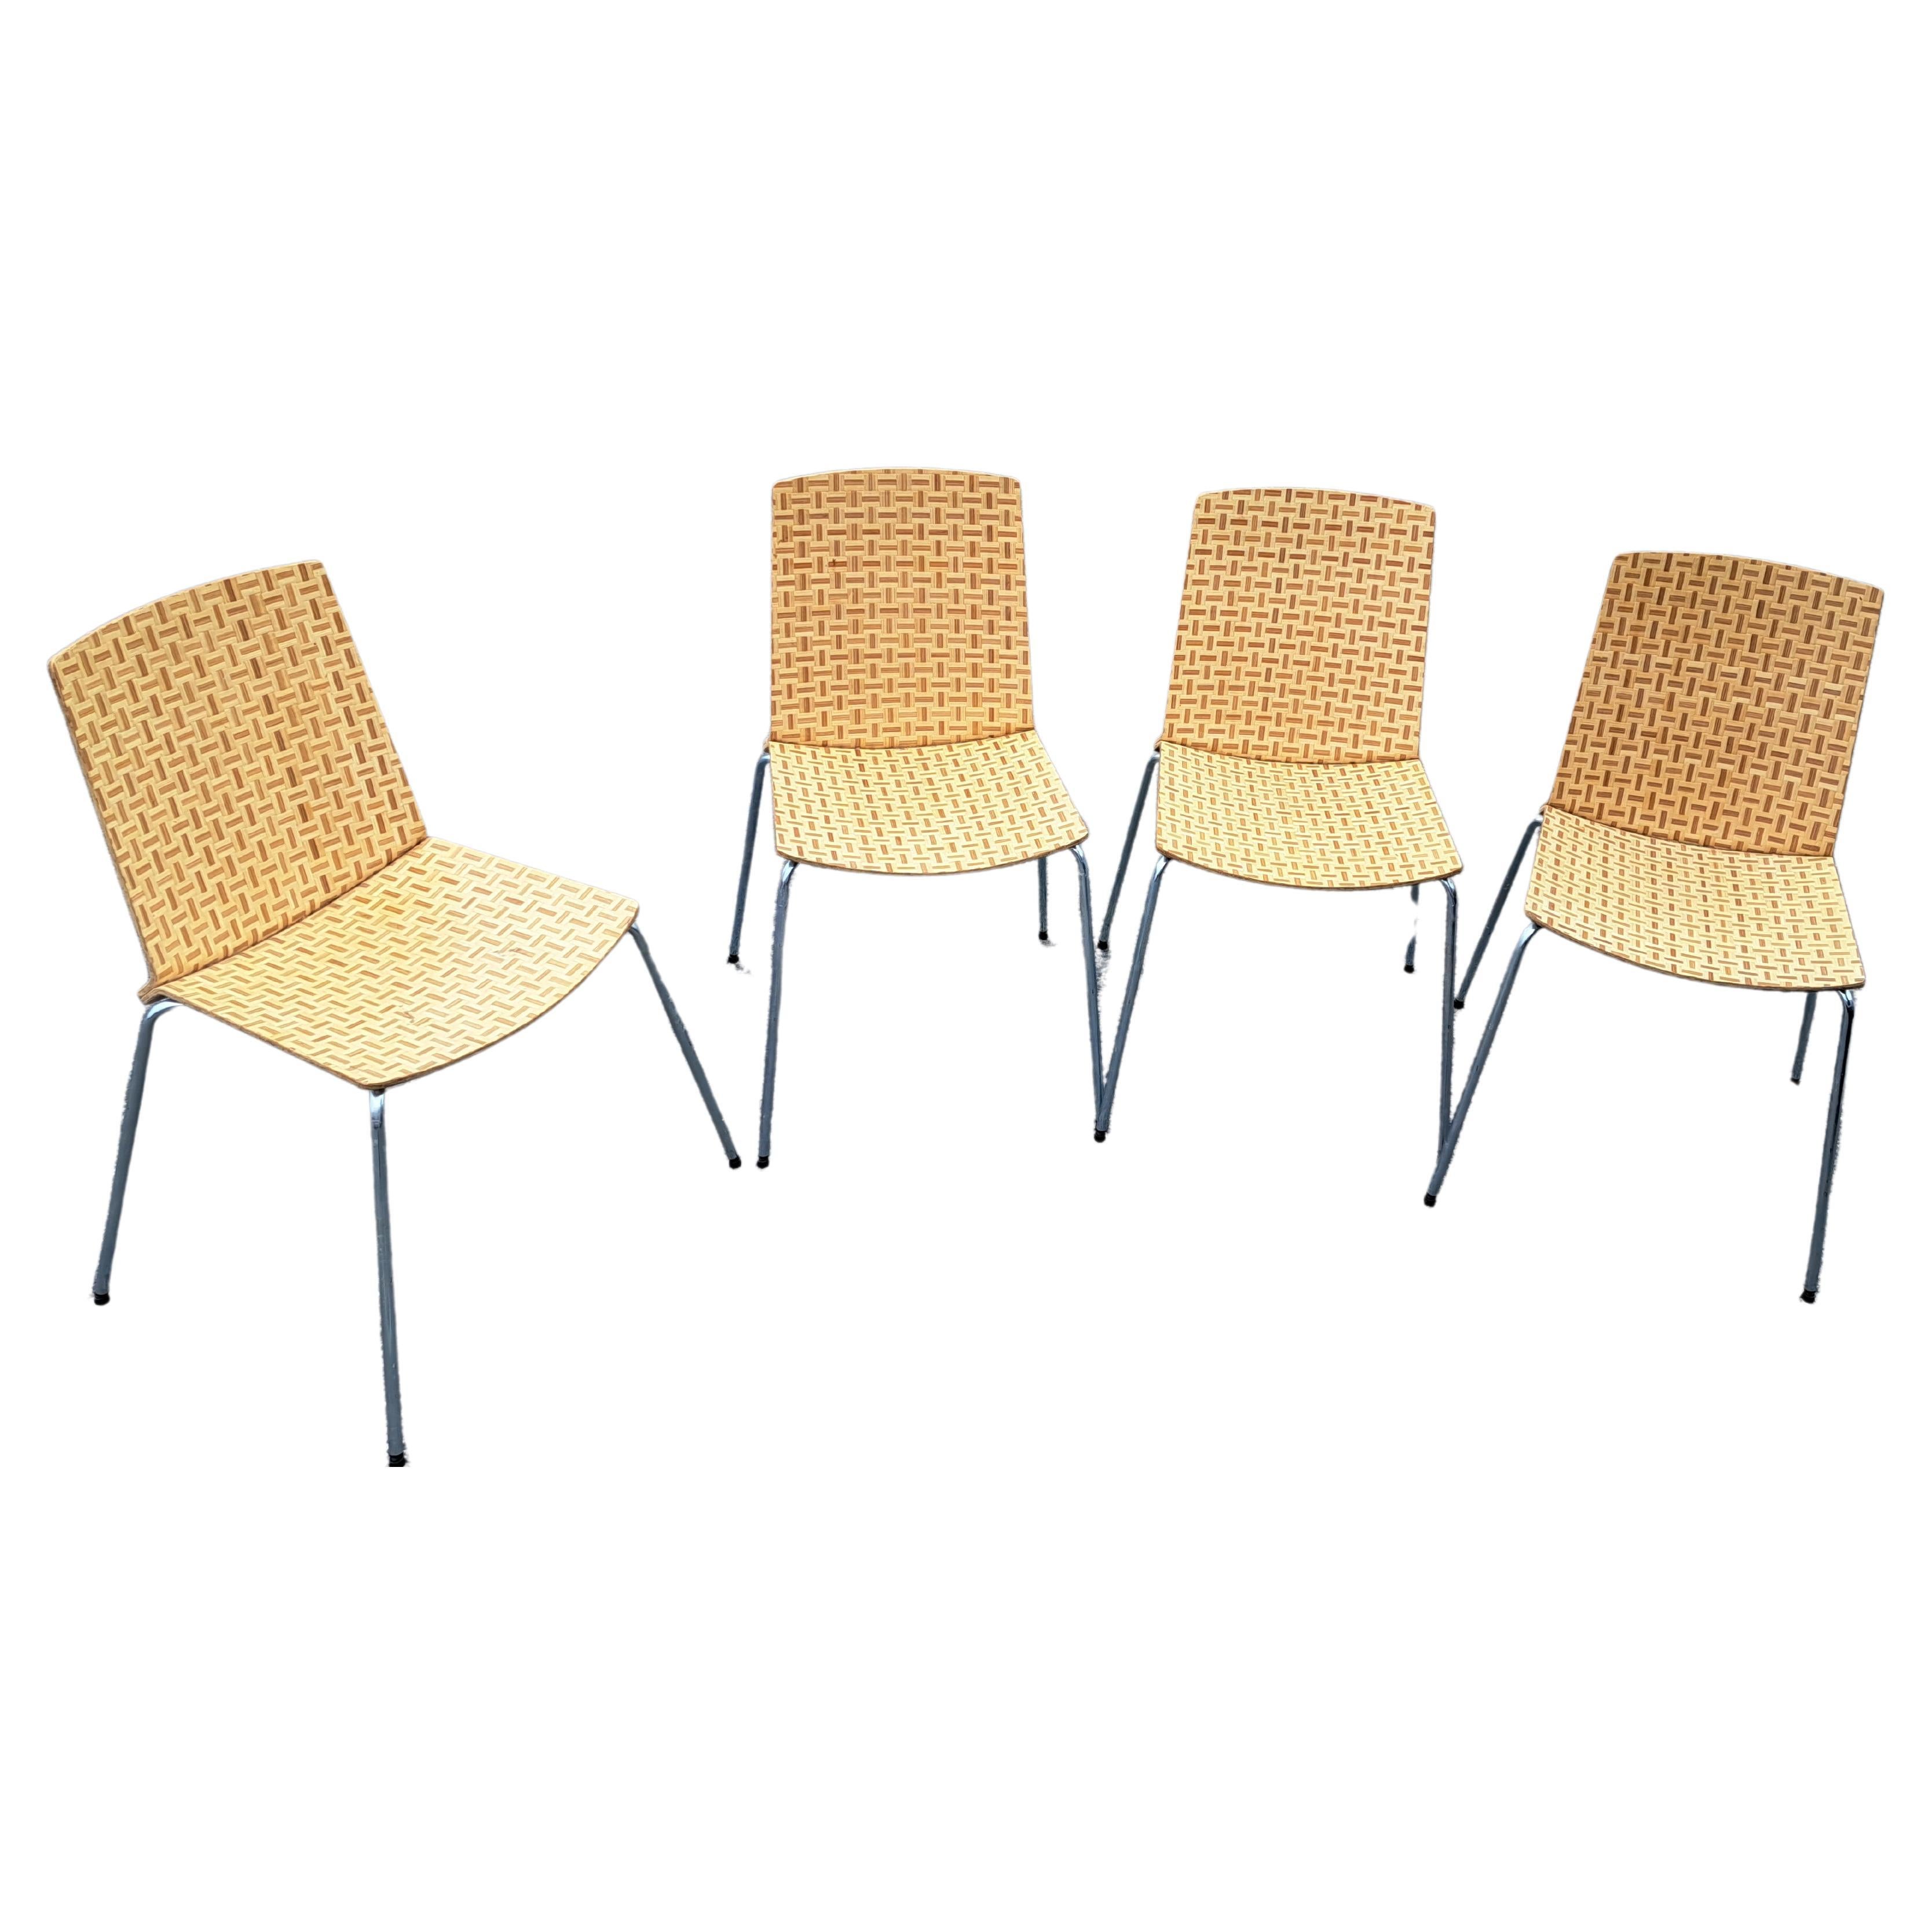 IKEA Dining Room Chairs